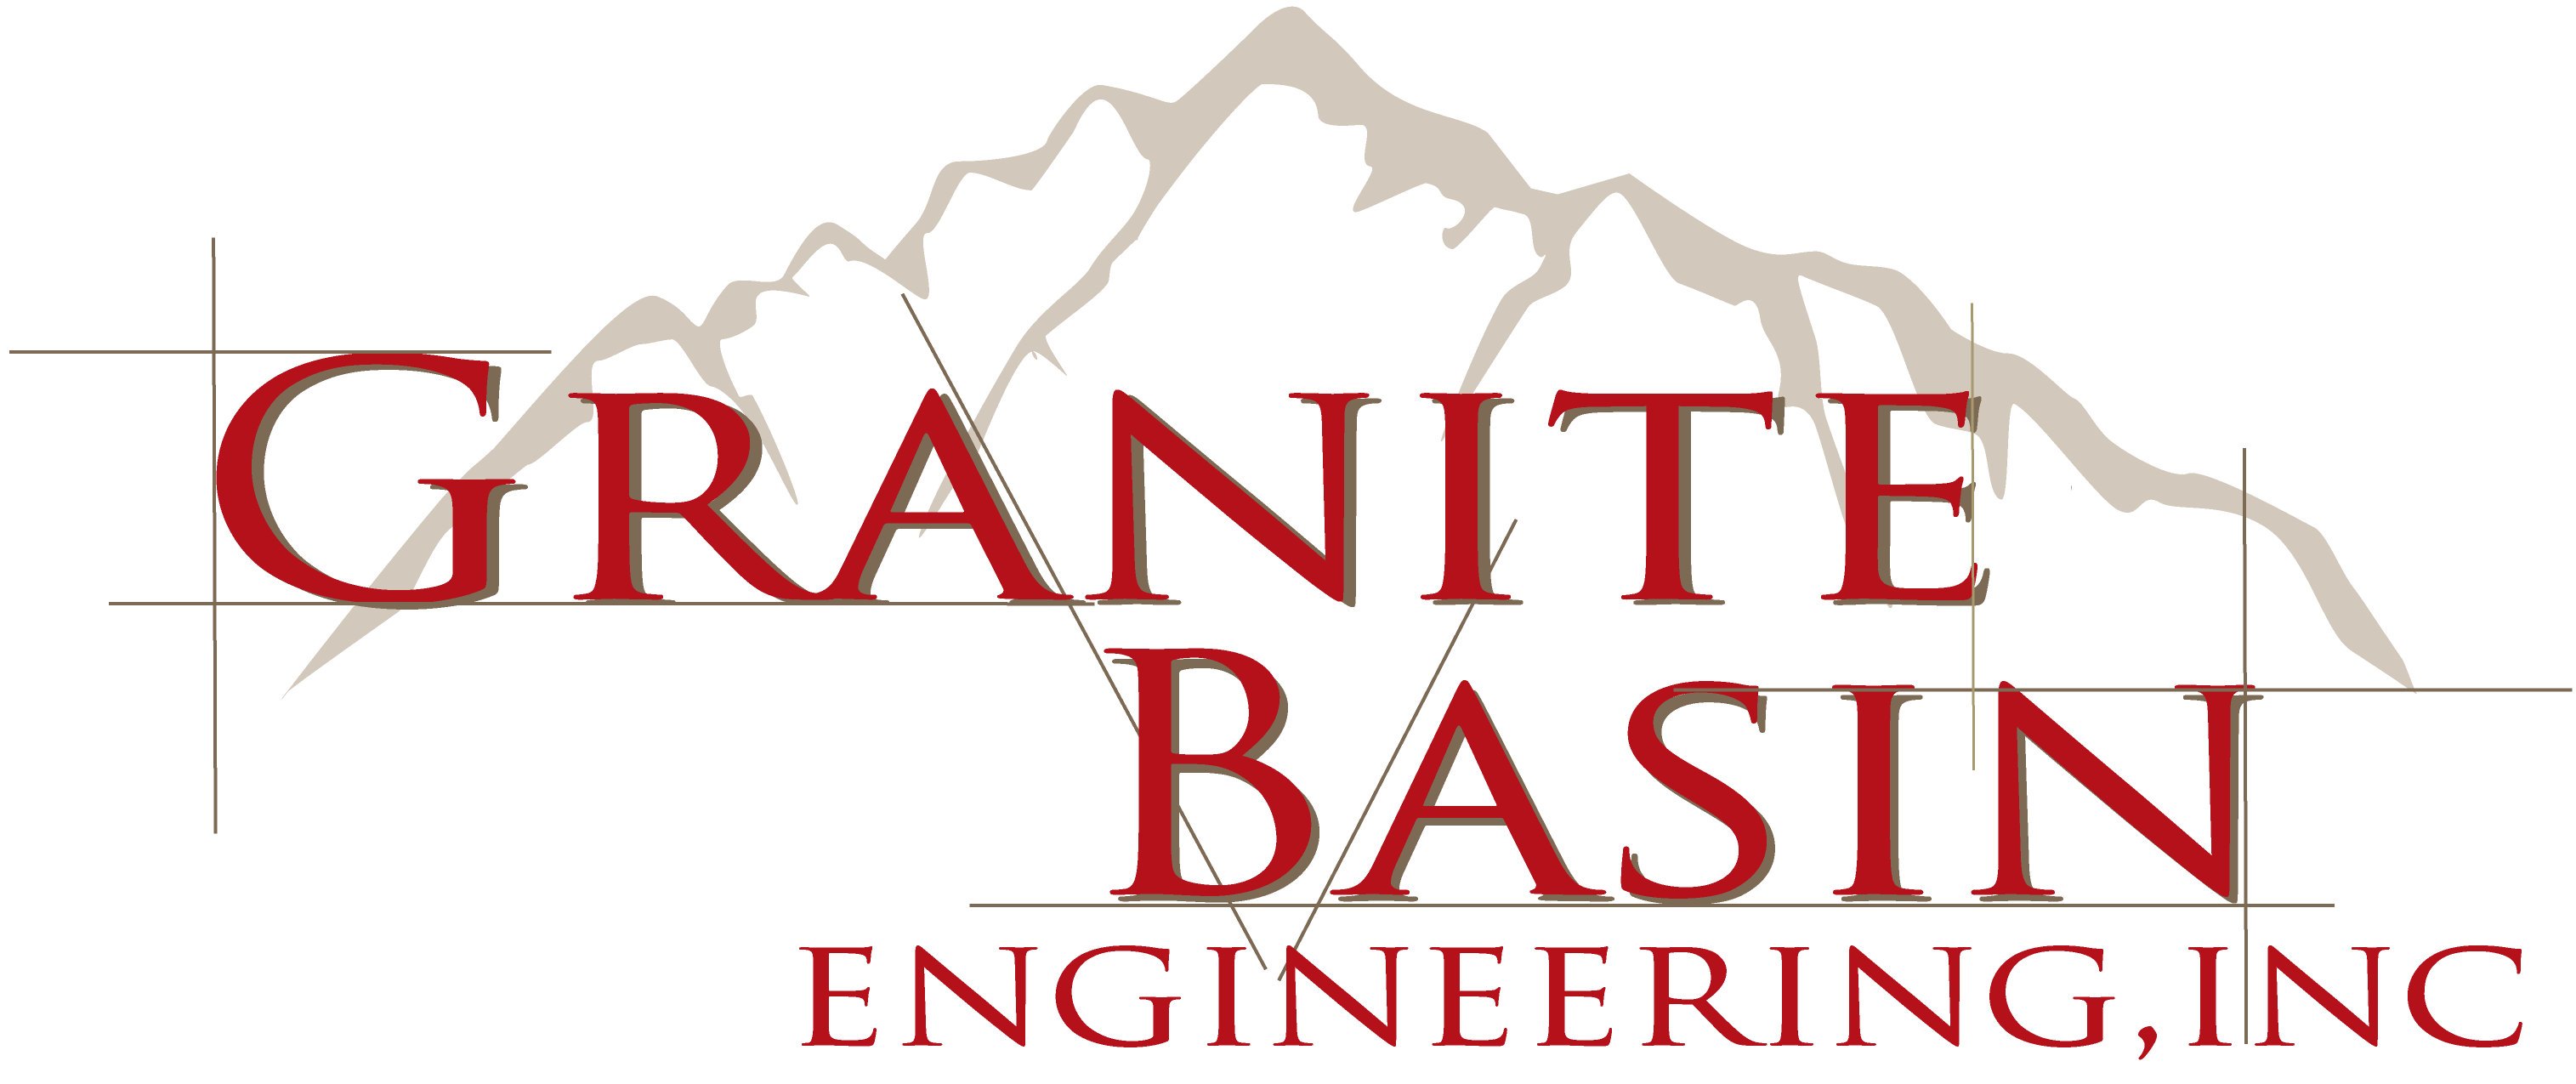 Contact Gbe Civil Engineering Land Surveying Granite Basin Engineering